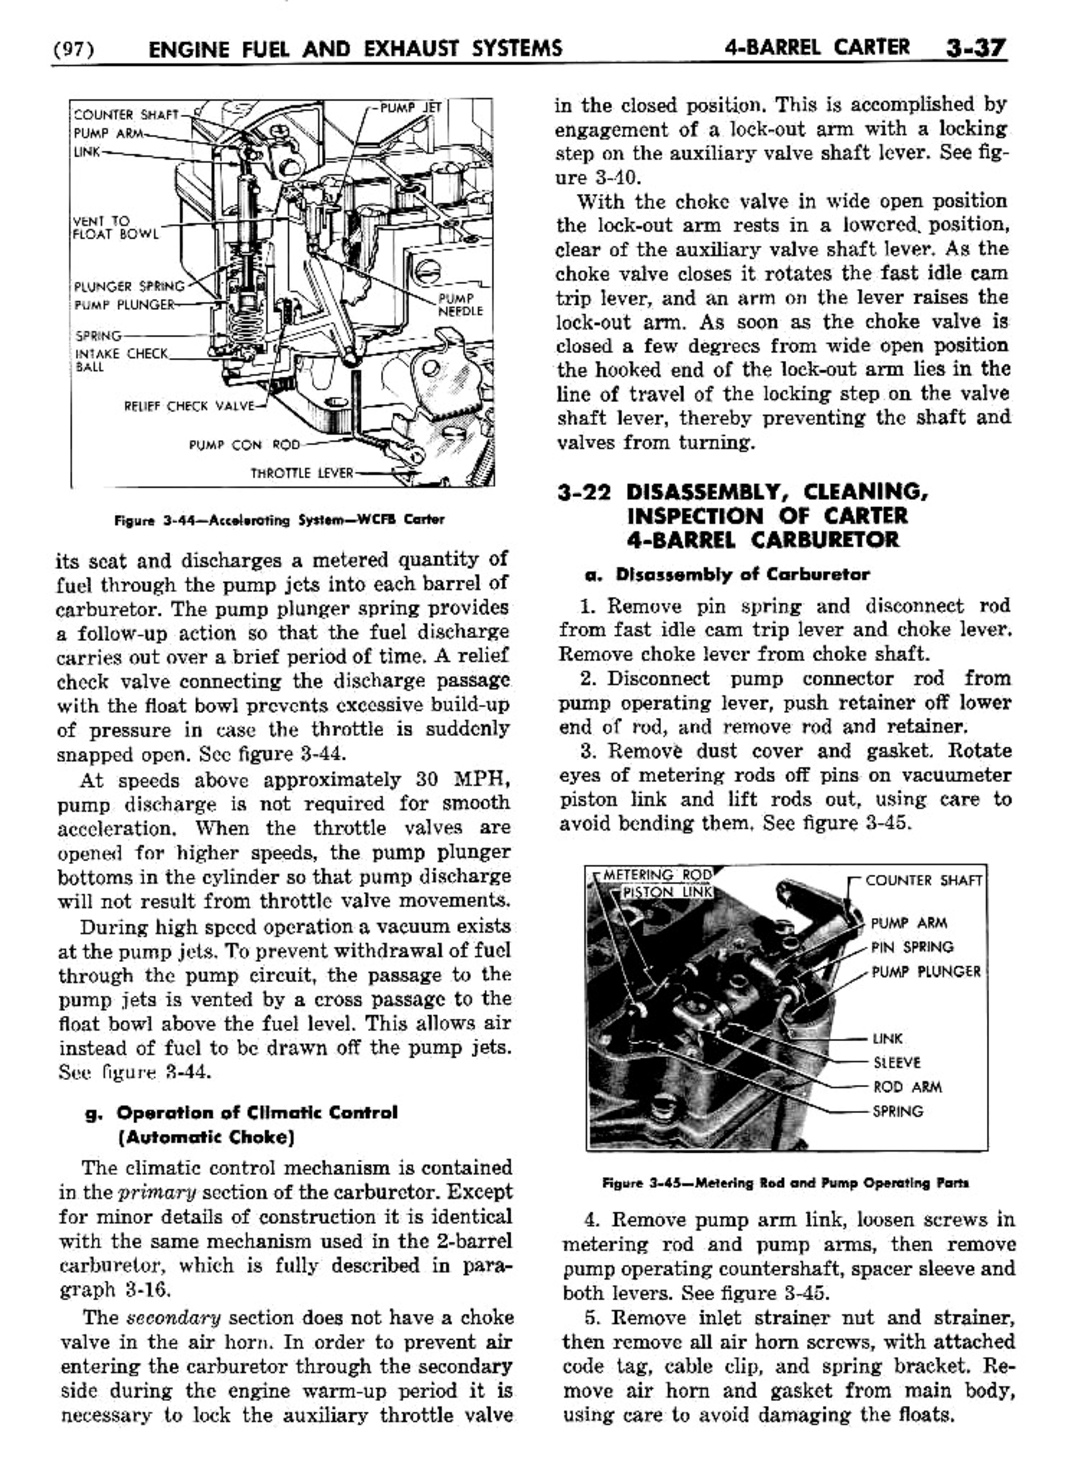 n_04 1954 Buick Shop Manual - Engine Fuel & Exhaust-037-037.jpg